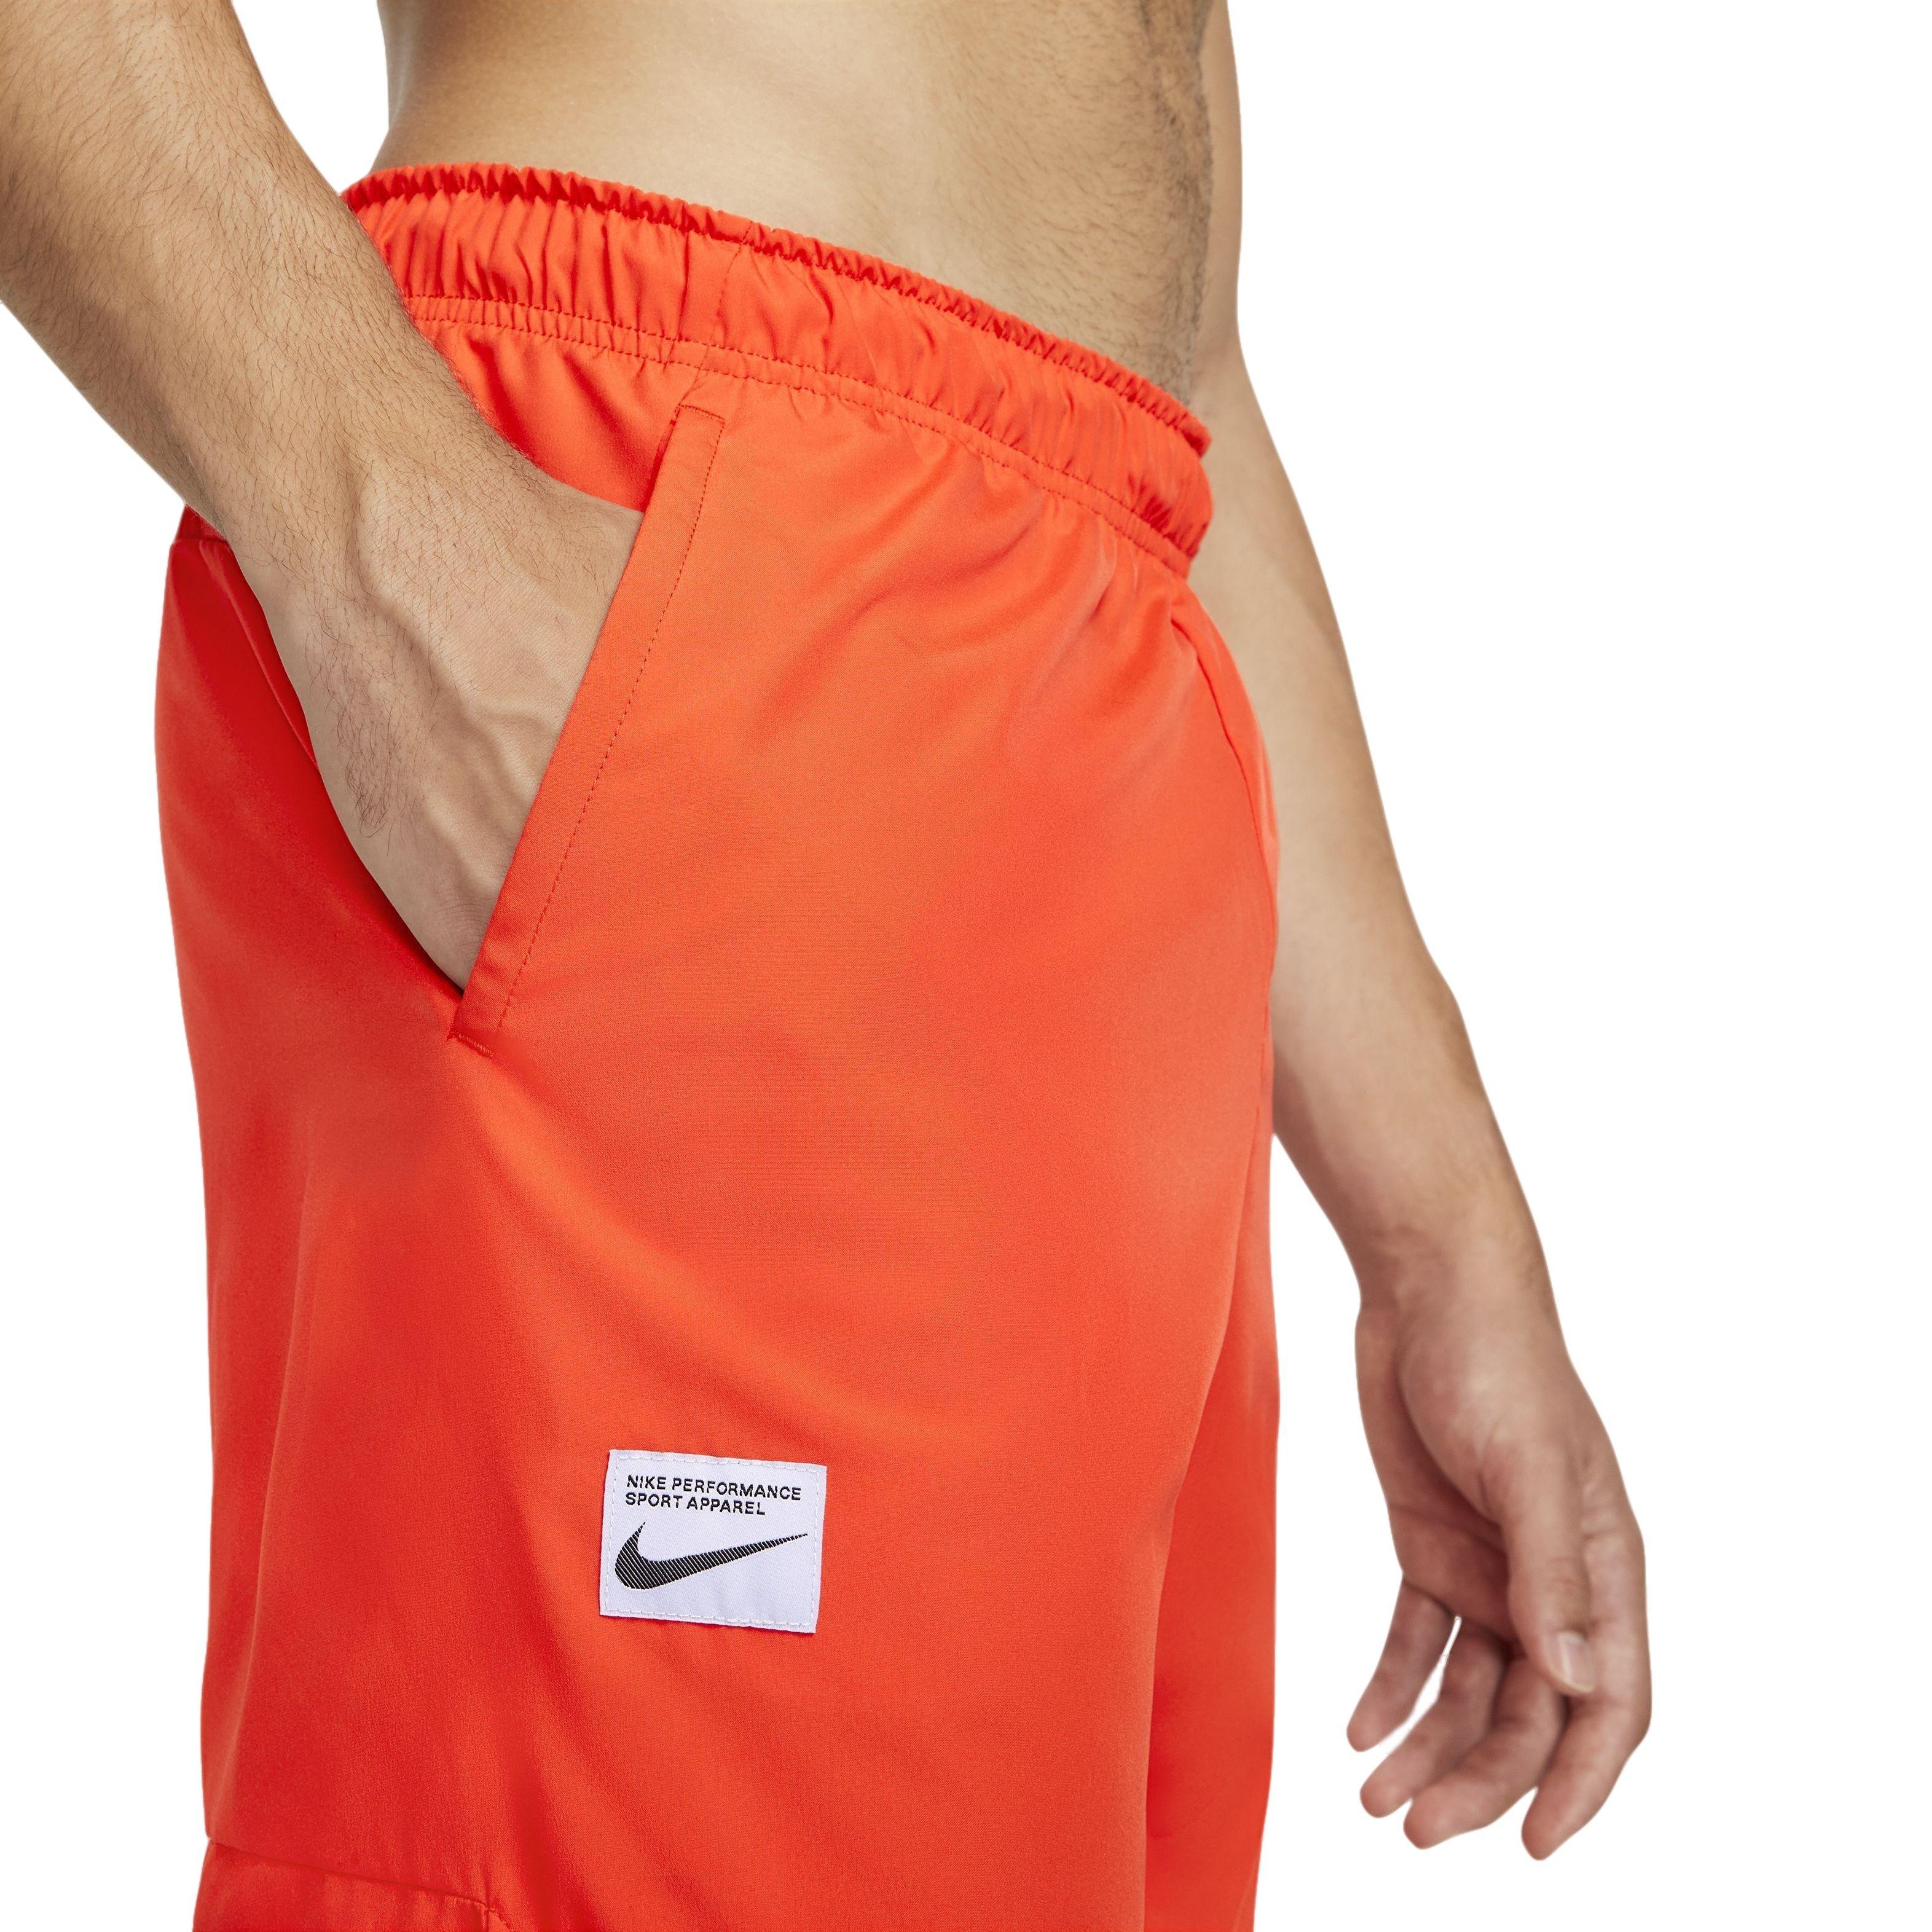 Nike Training Dri-FIT flex woven 9 inch shorts in blue